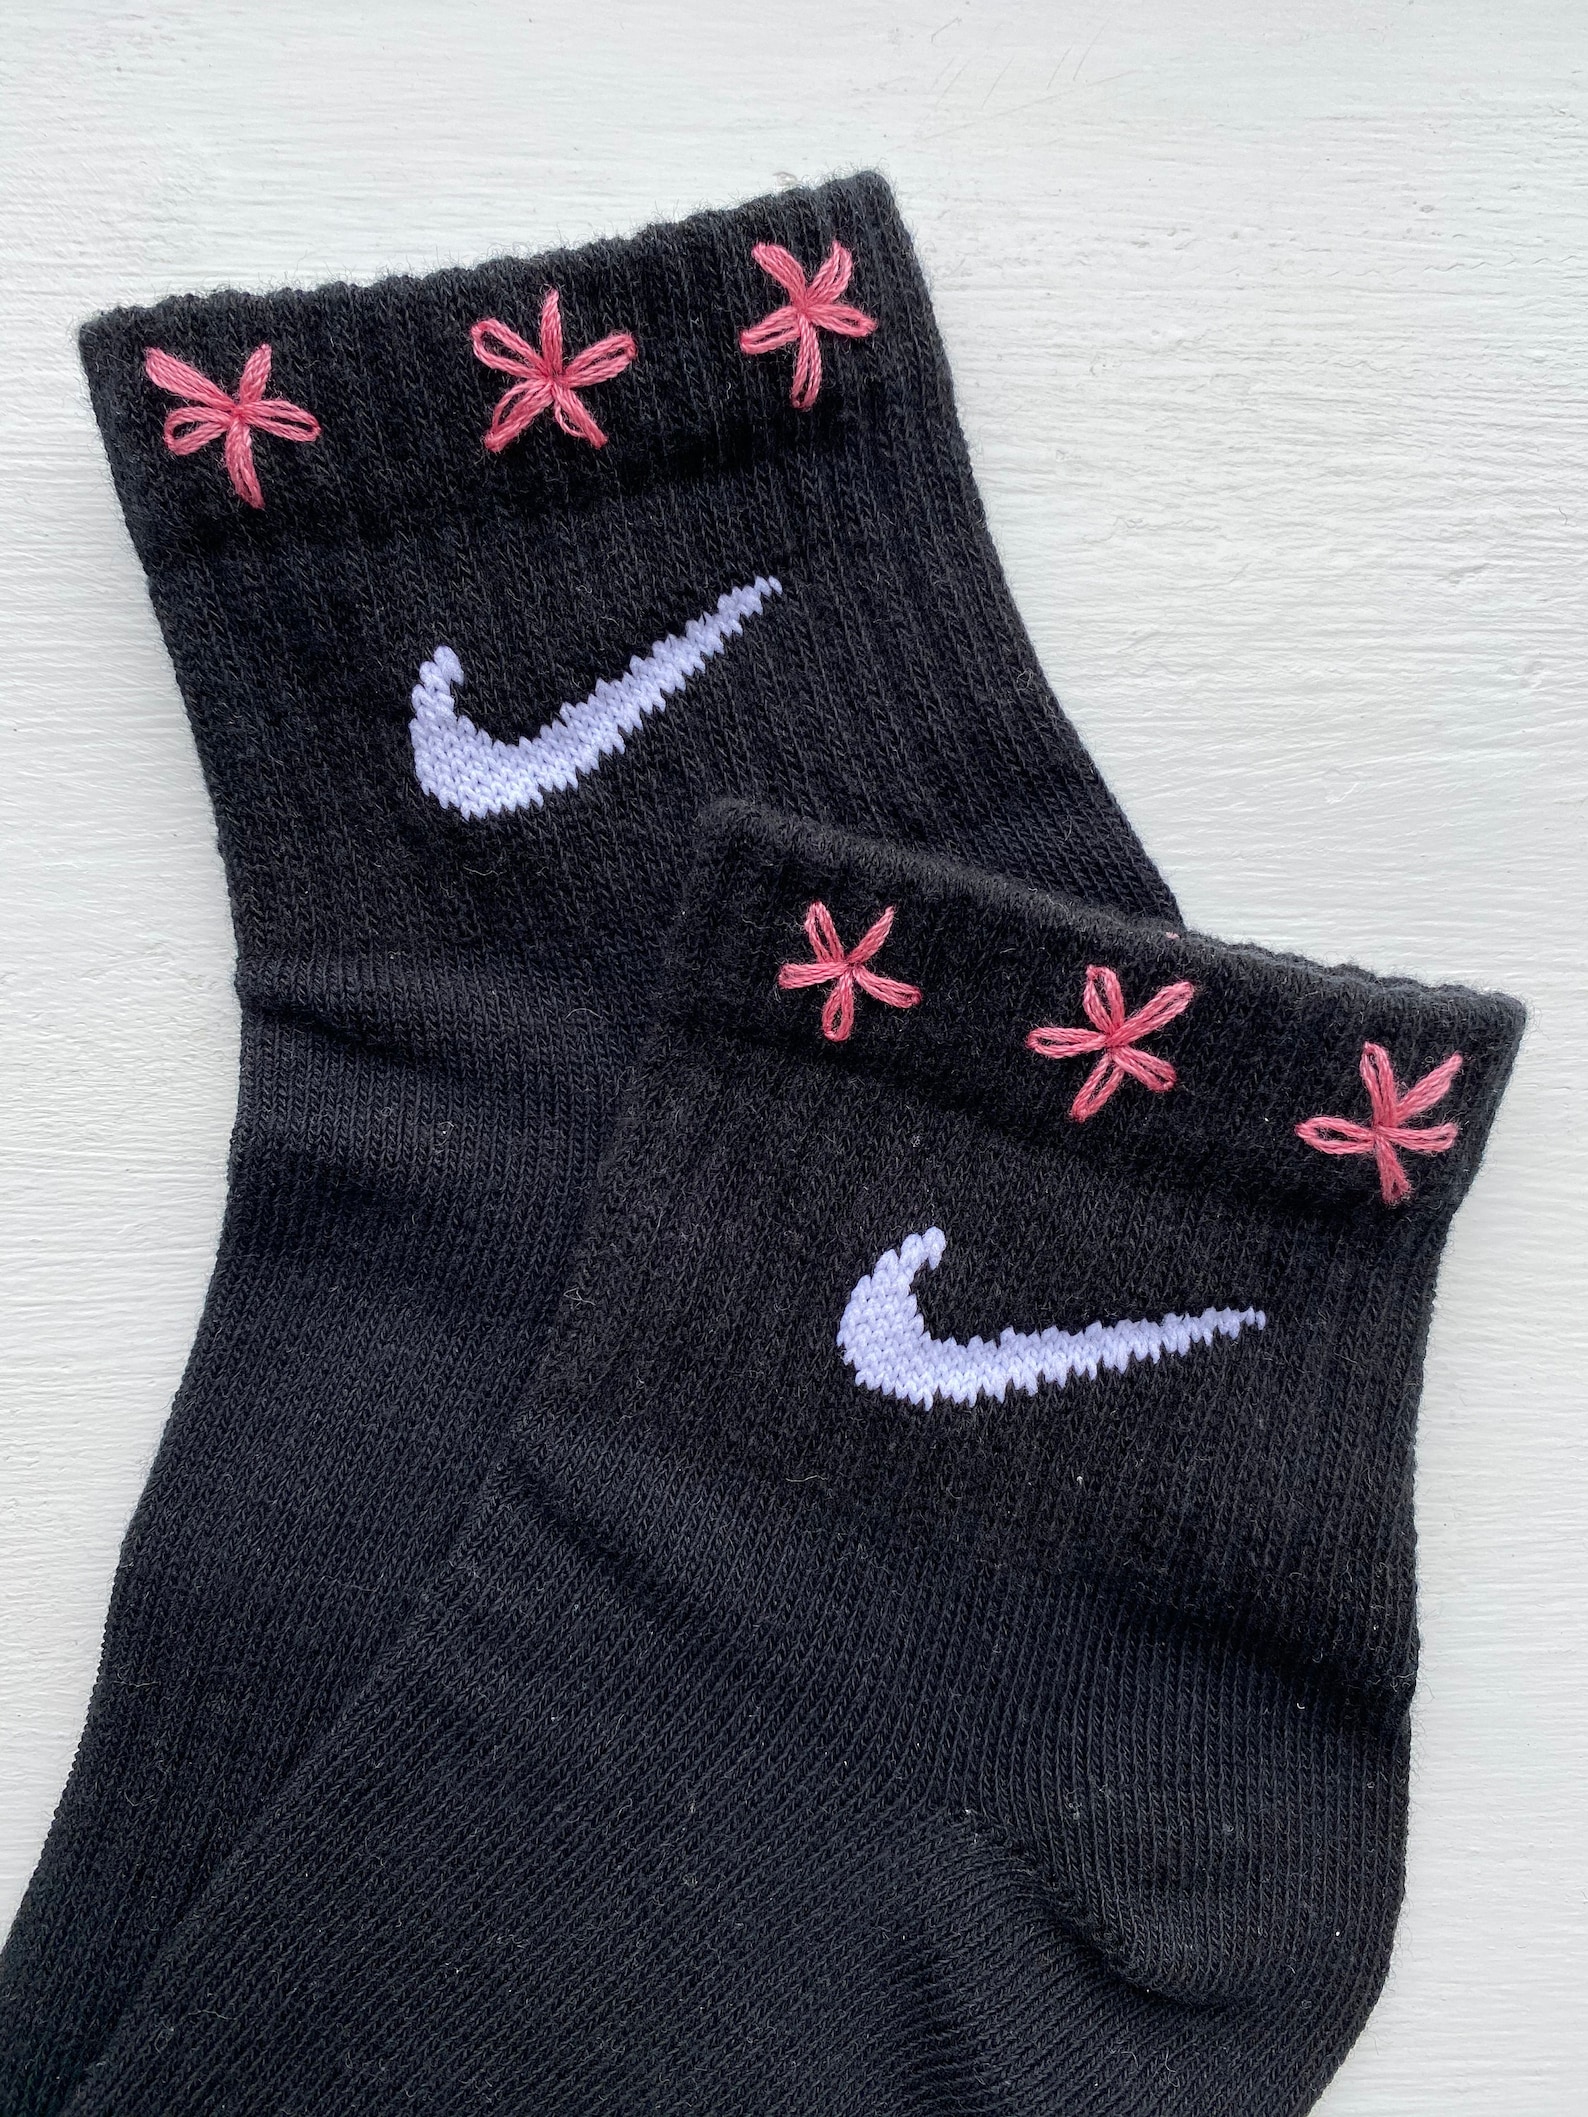 Customisable hand-embroidered Nike daisy socks | Etsy